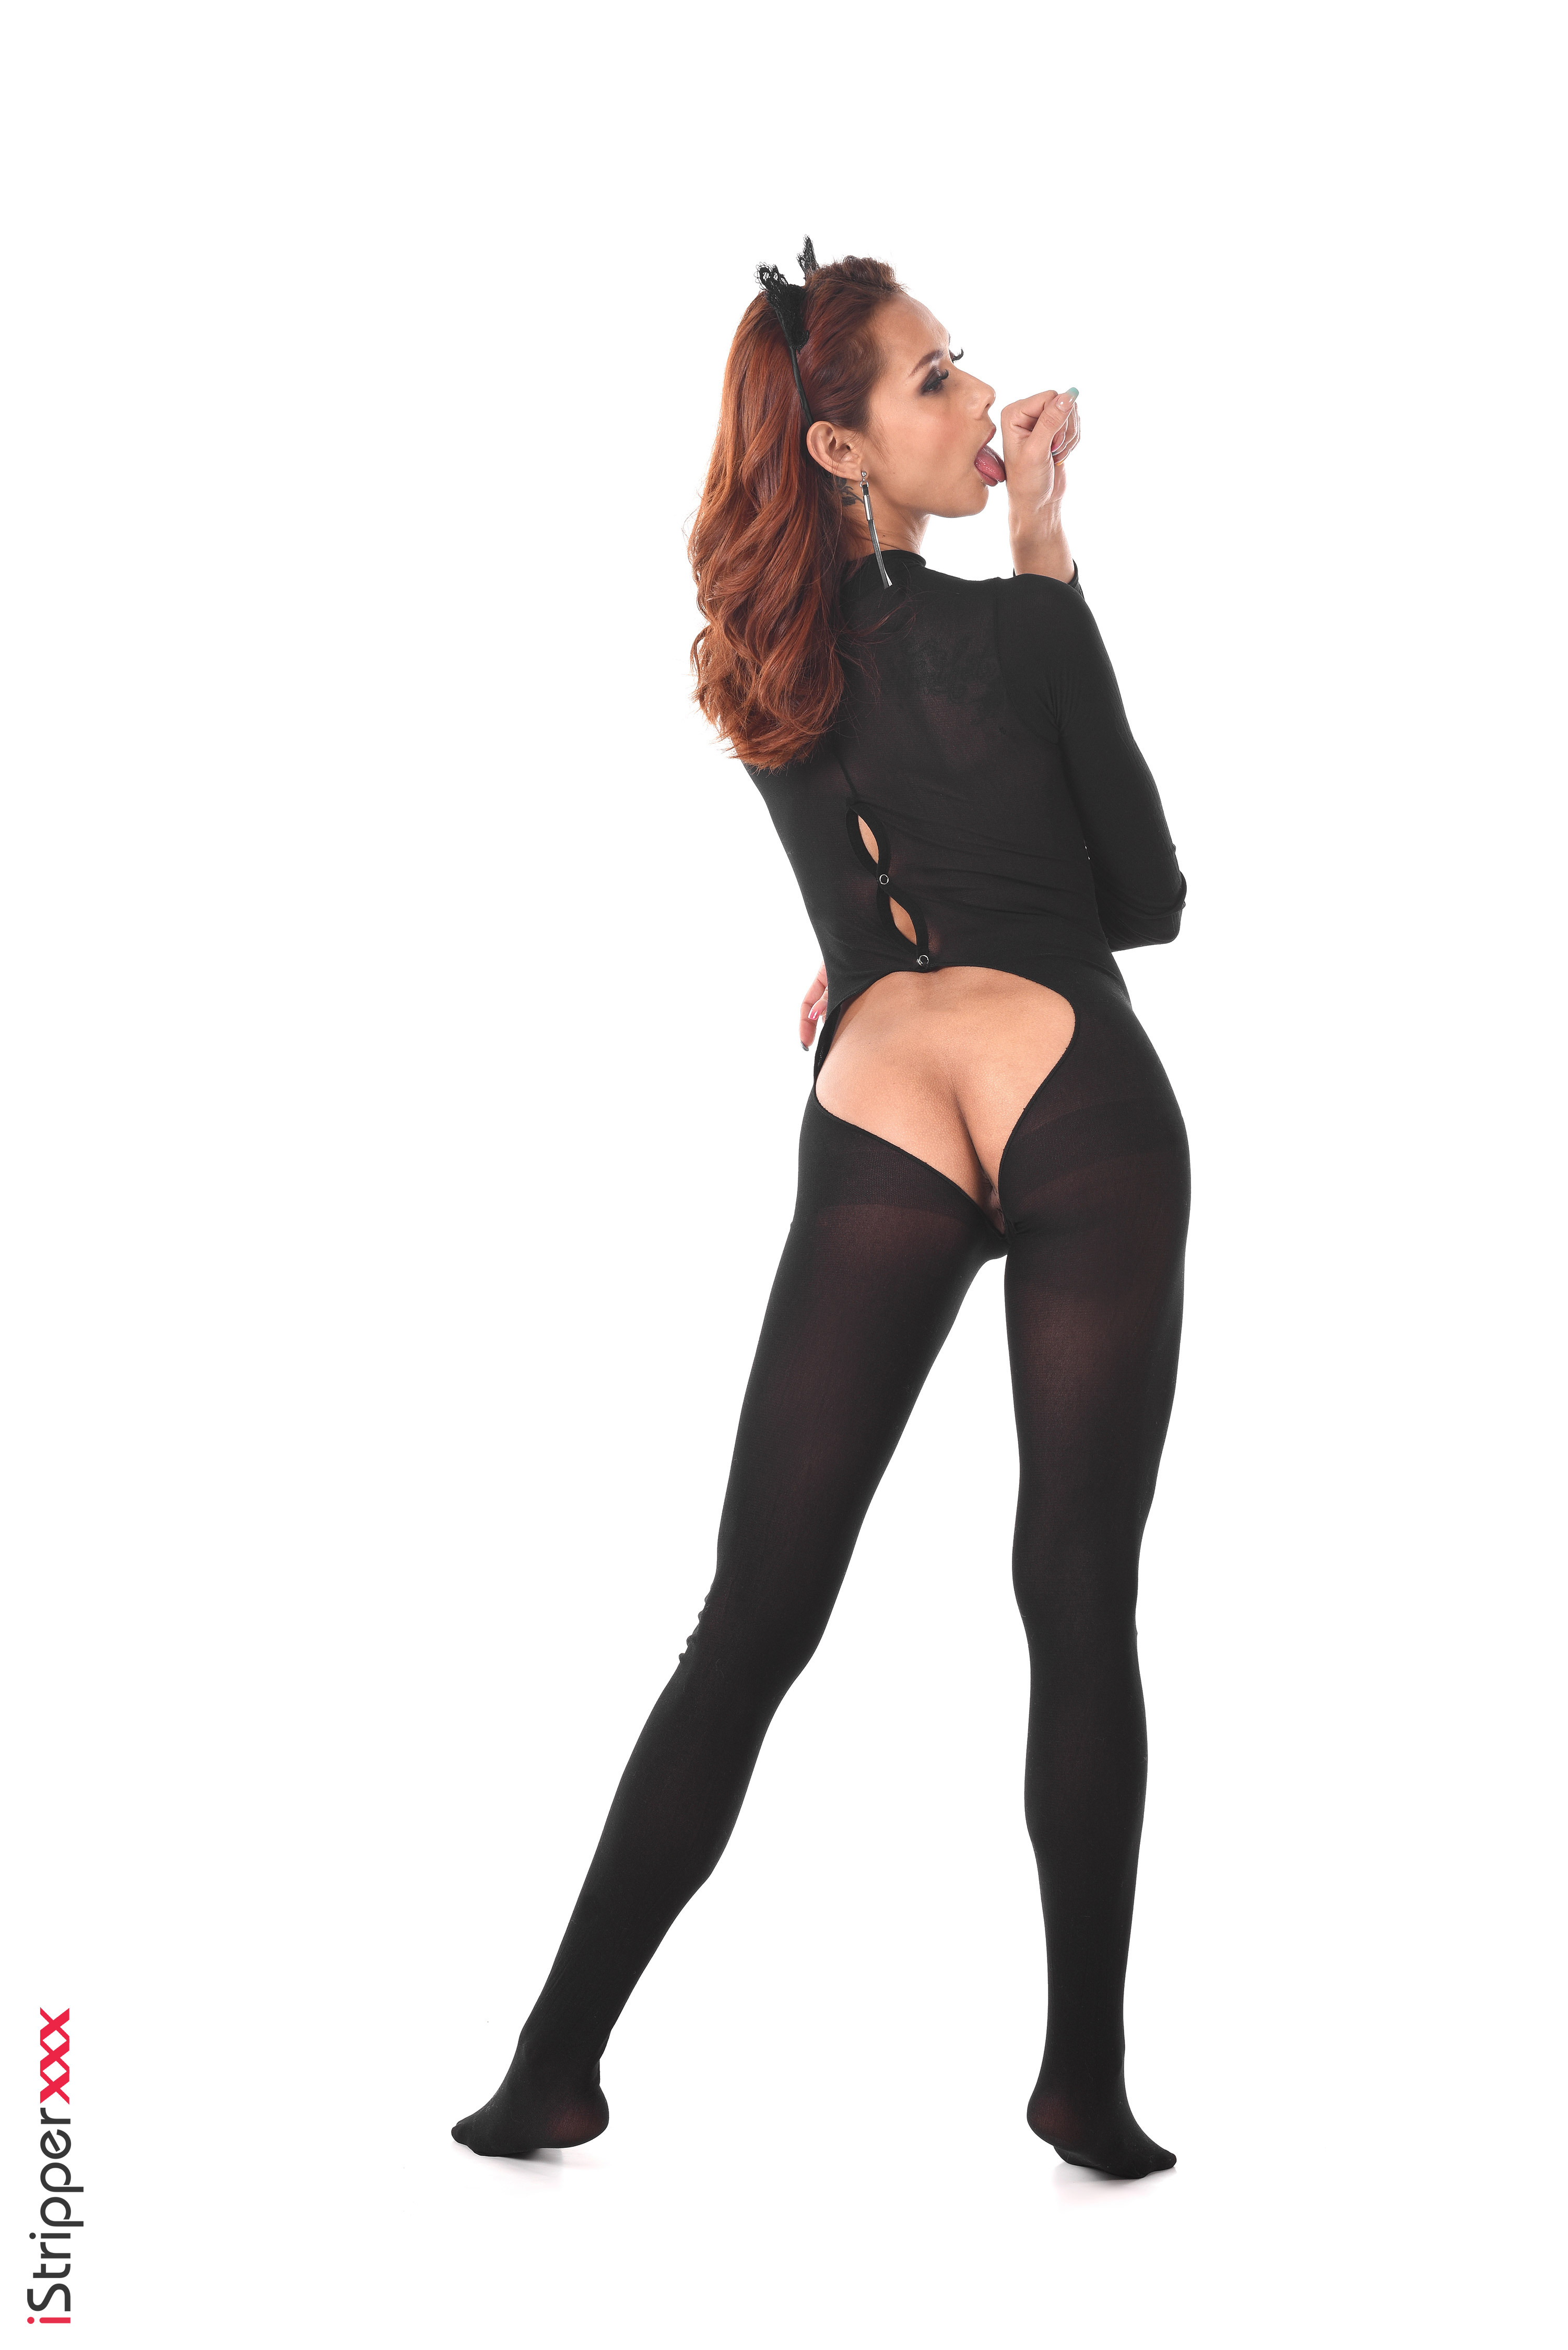 Veronica Leal Hottest Catwoman virtuagirl desktop strippers